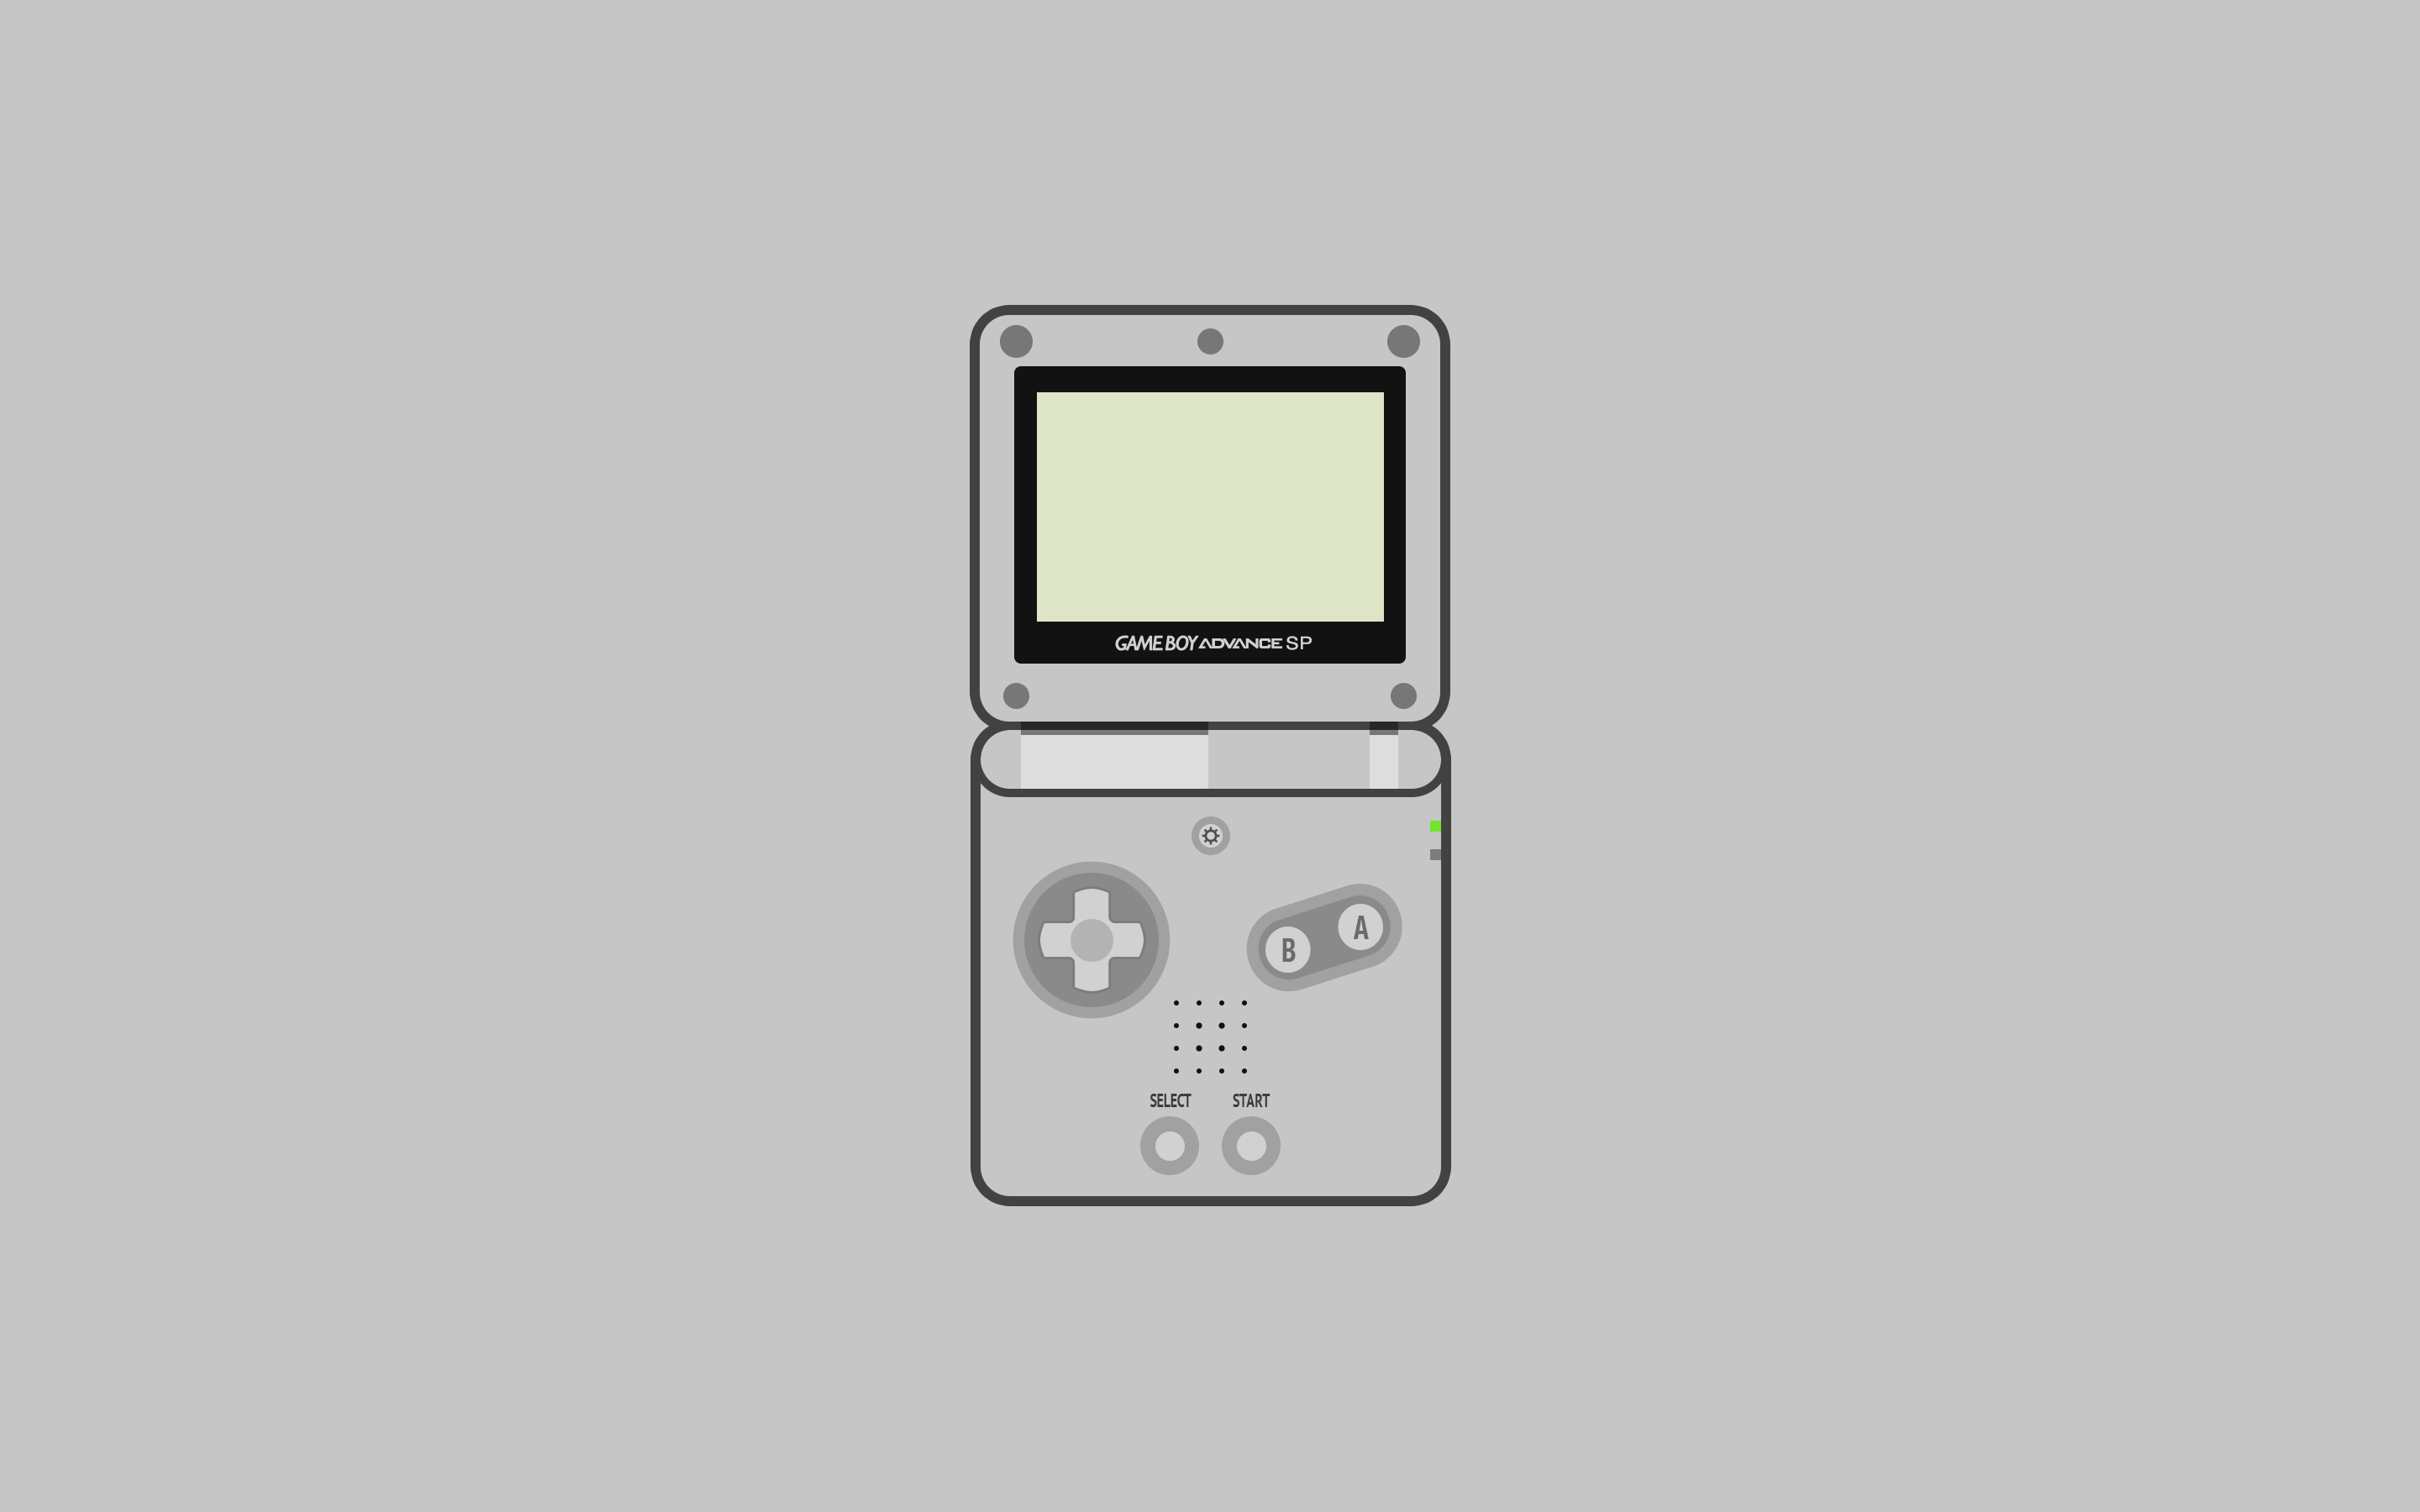 2880x1800 Nintendo Game Boy Advance SP wallpaper - grey. Download full-size - grey.